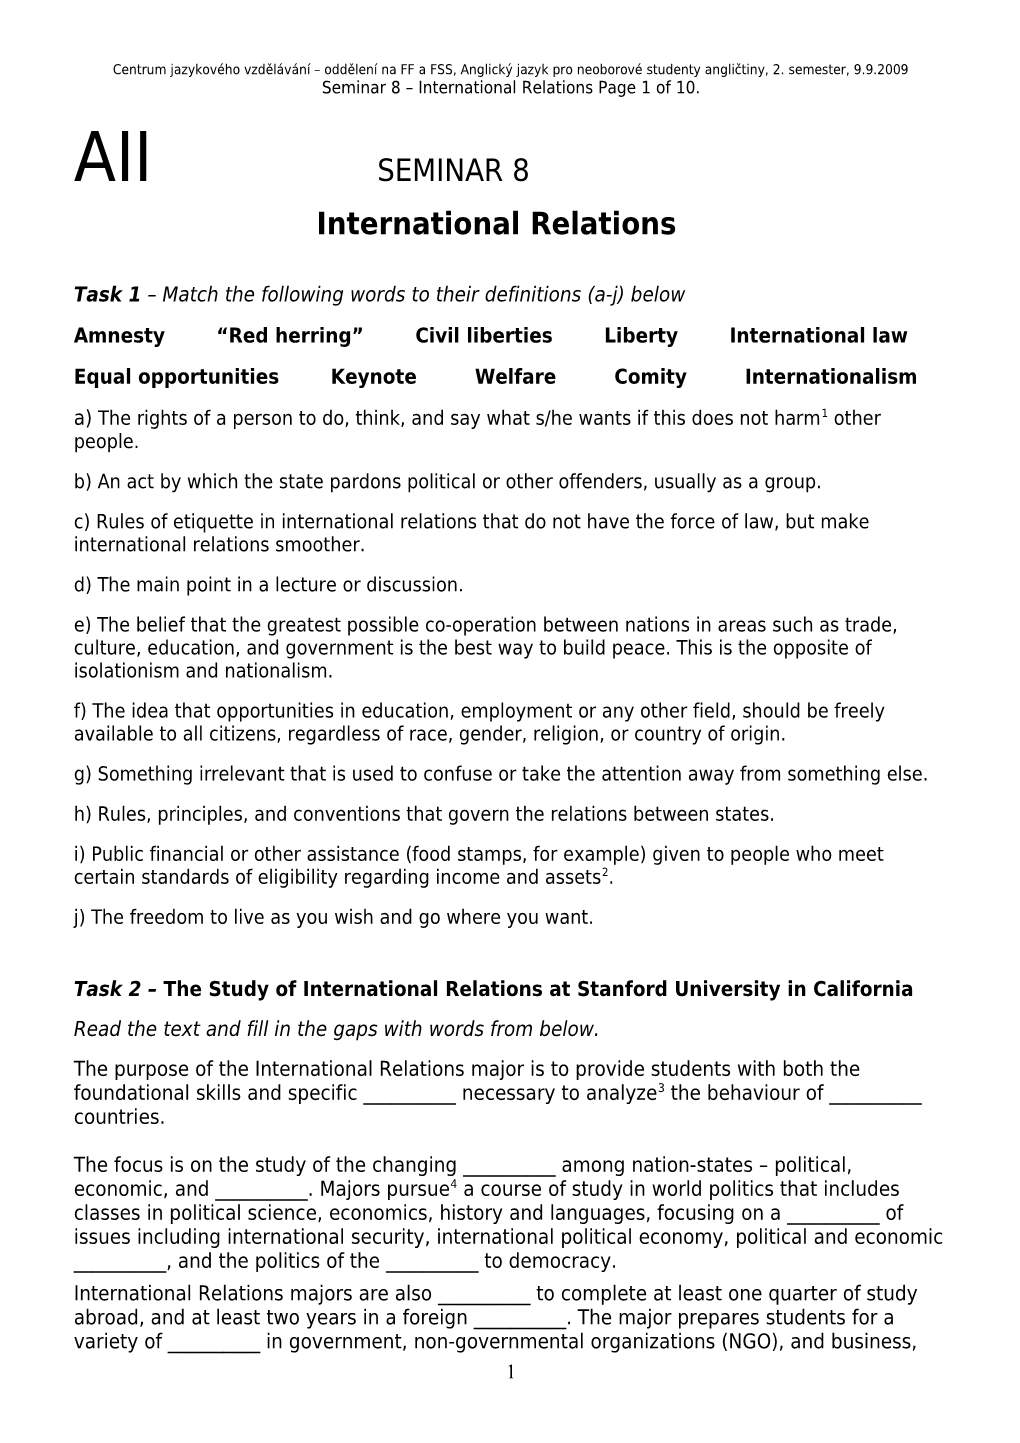 Standford University; Department of International Relations